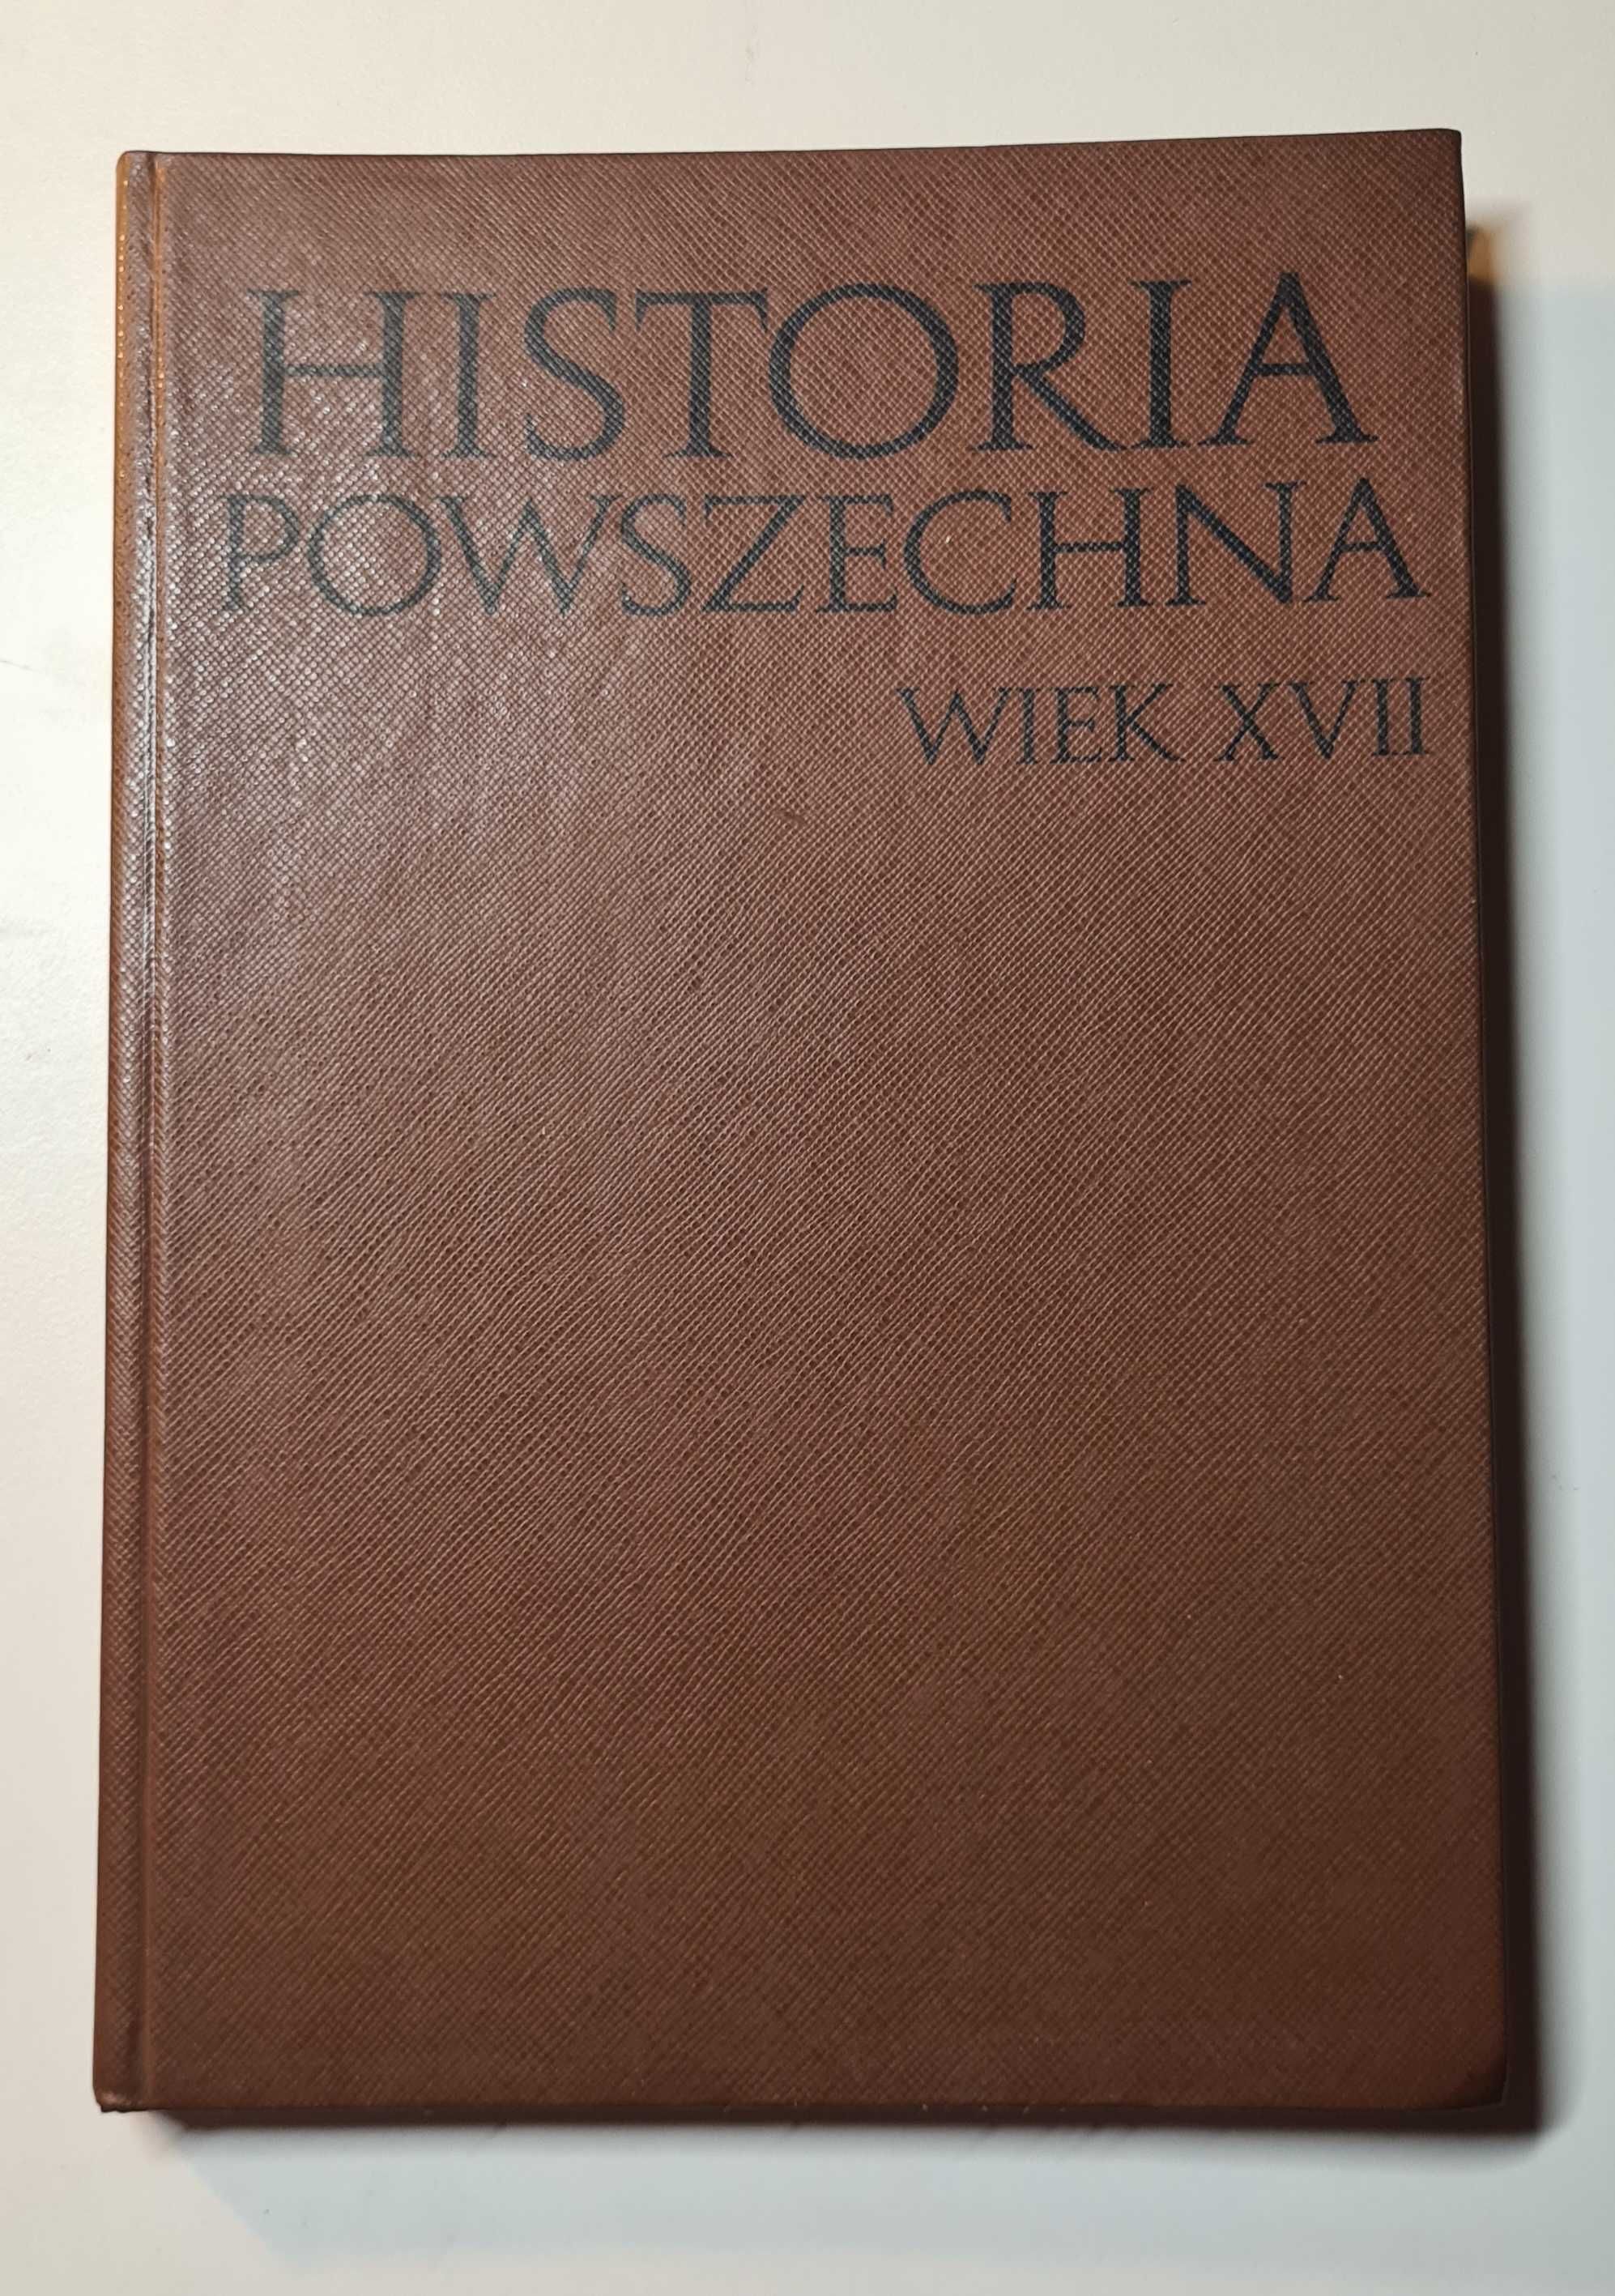 Adam Kersten - Historia Powszechna Wiek XVII